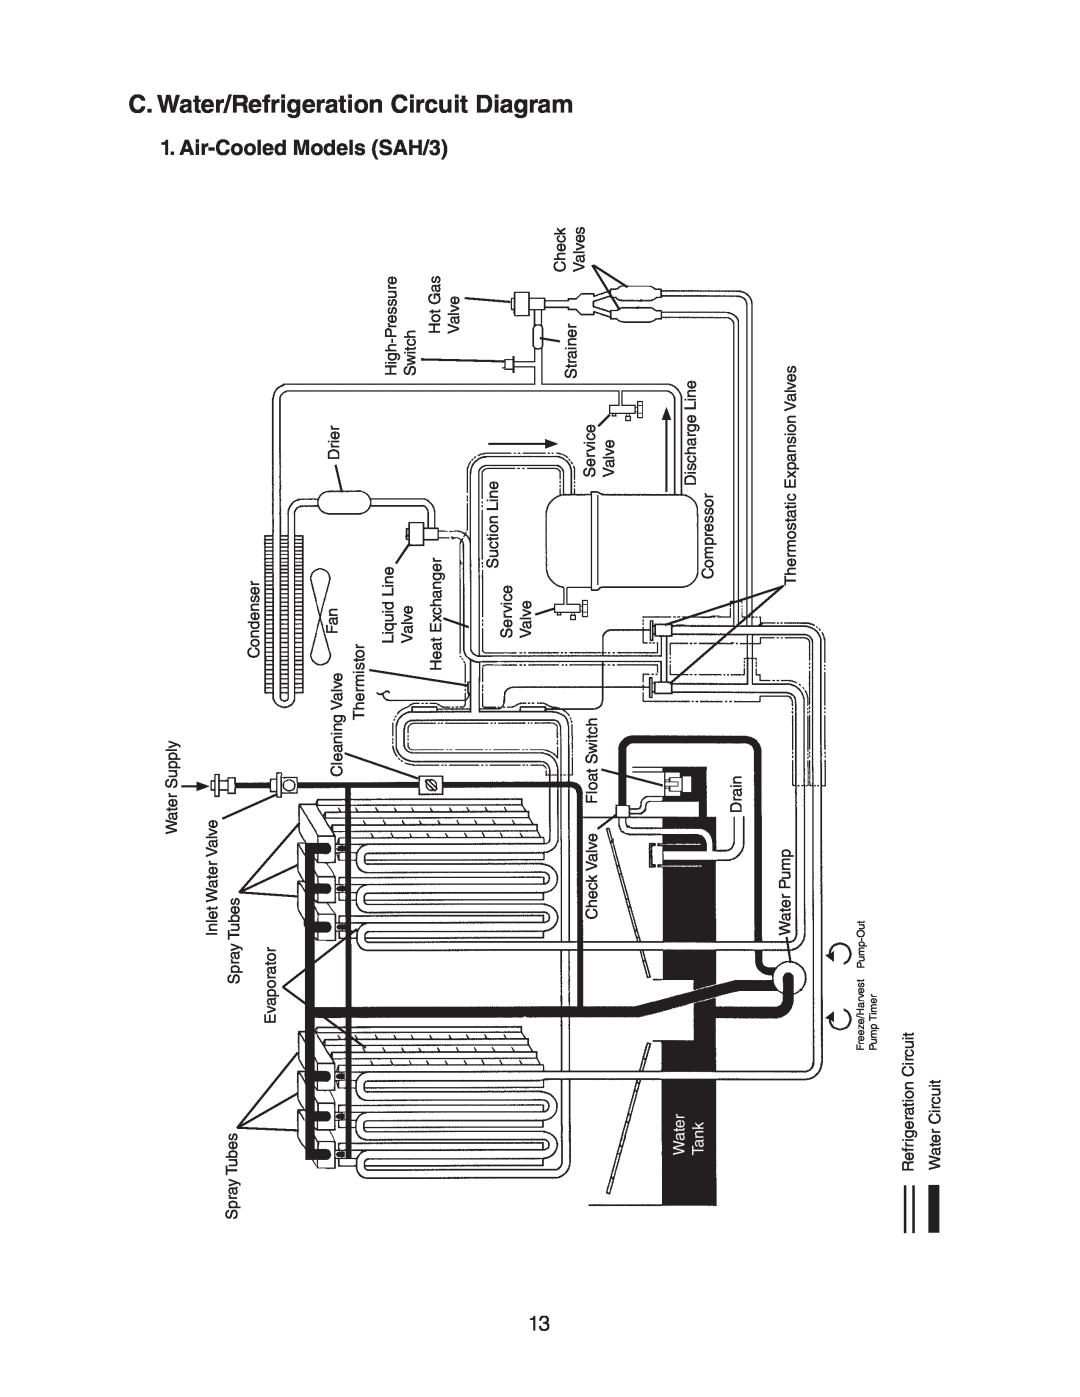 Hoshizaki KM-1301SAH/3, SRH/3, SWH/3 Diagram, C. Water/Refrigeration Circuit, Air-Cooled Models SAH/3, Water Tank 